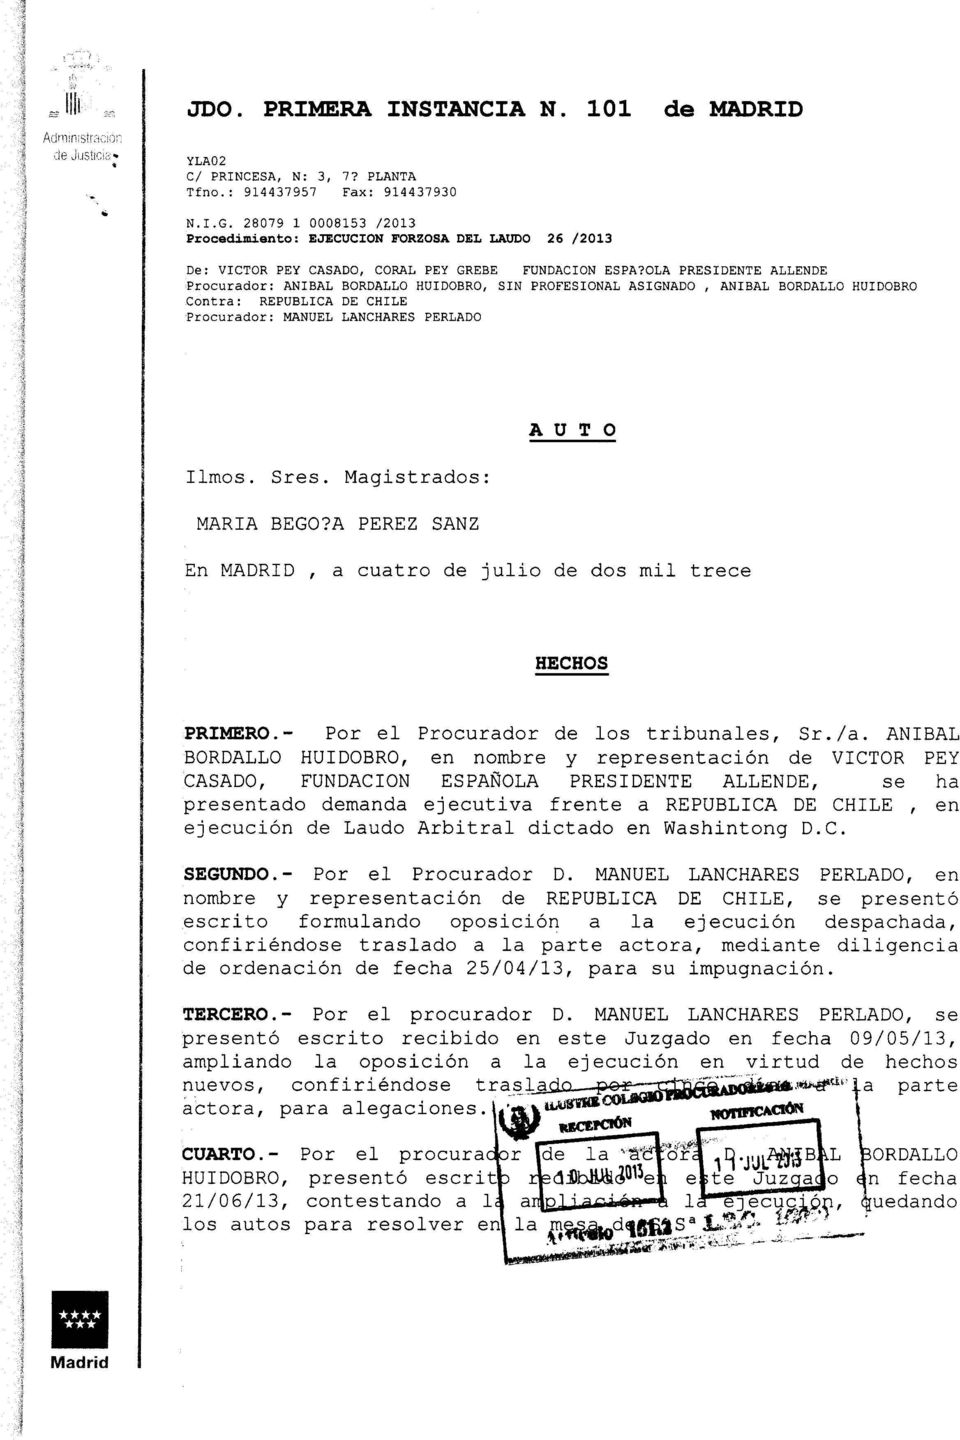 SIN PROFESIONAL ASIGNADO, ANIBAL BORDALLO HUIDOBRO Contra: REPUBLICA DE CHILE Procurador: MANUEL LANCHARES PERLADO AUT 0 Ilmos. Sres. Magistrados: MARIA BEGO?